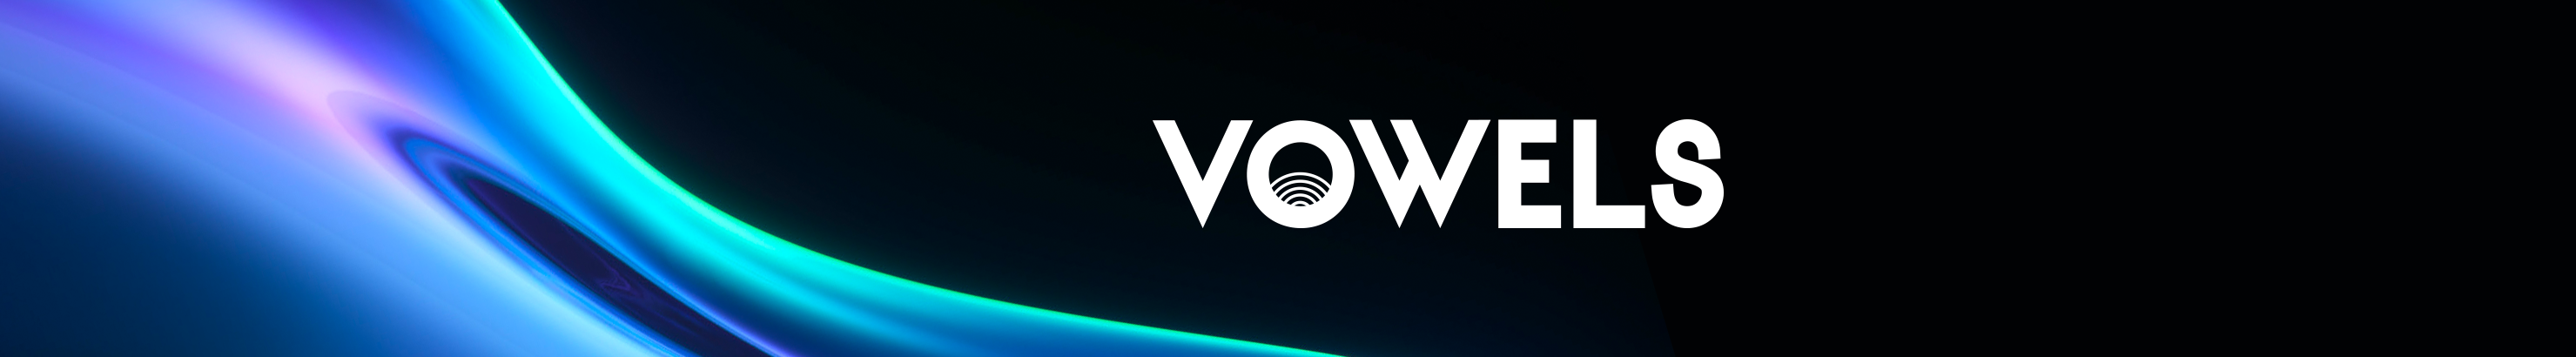 Vowels Branding Agency's profile banner